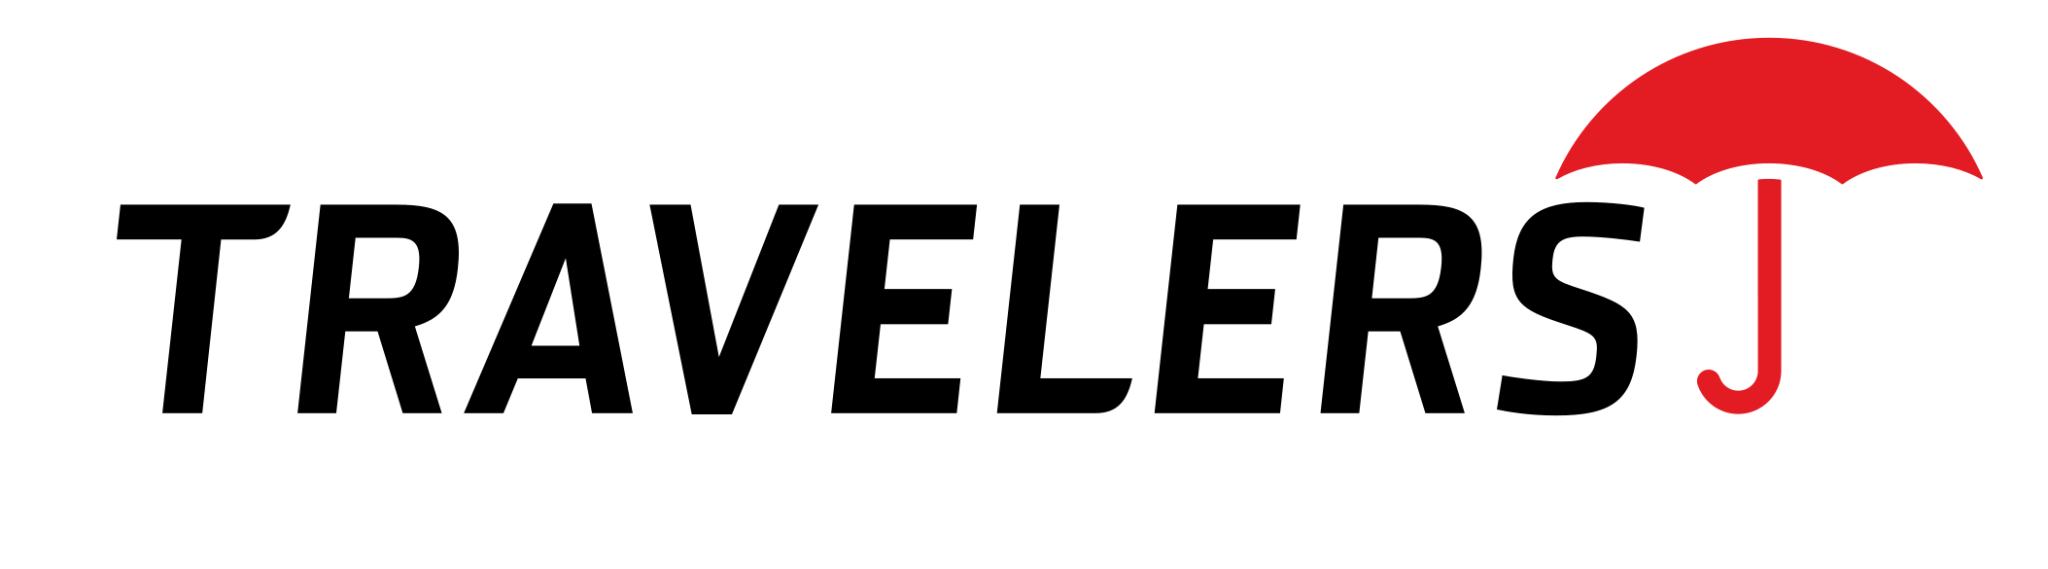 The Travelers Companies Logo E1446753164174